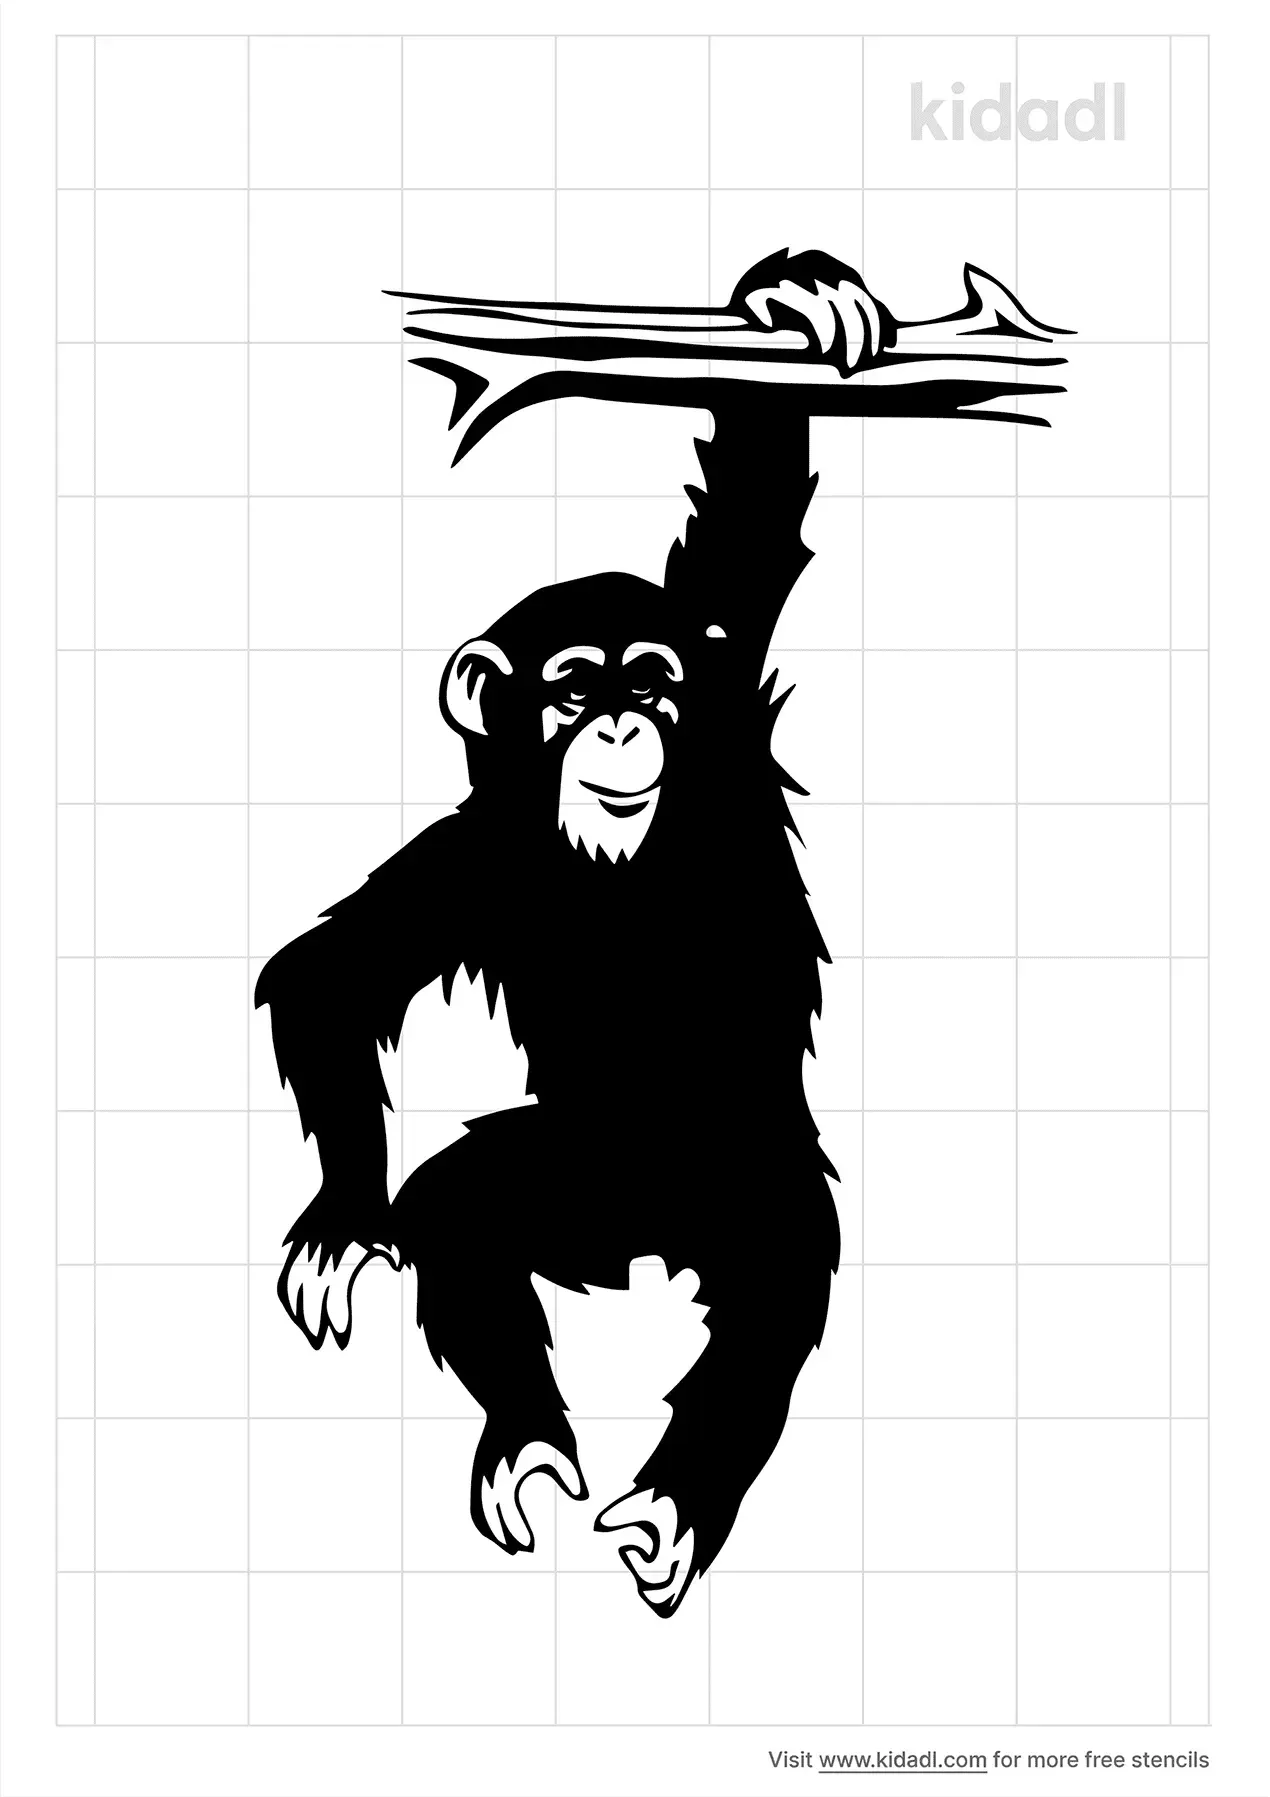 Free Realistic Monkey Stencil | Stencil Printables | Kidadl